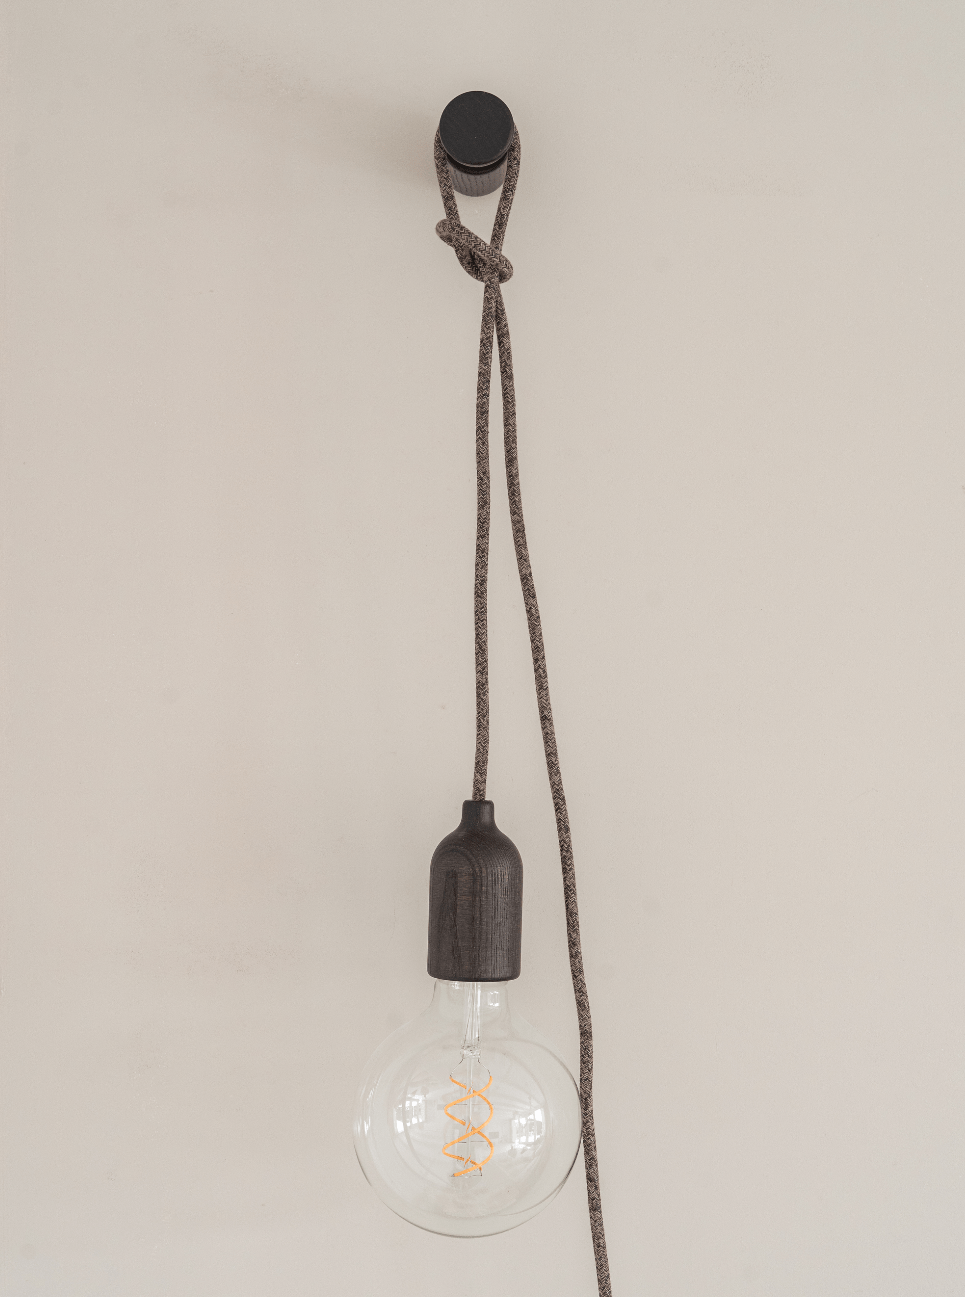 ik wil Hoofdstraat kwartaal Donker houten stekker lamp met wandhaak - 200 cm snoer | Liefs van Emma